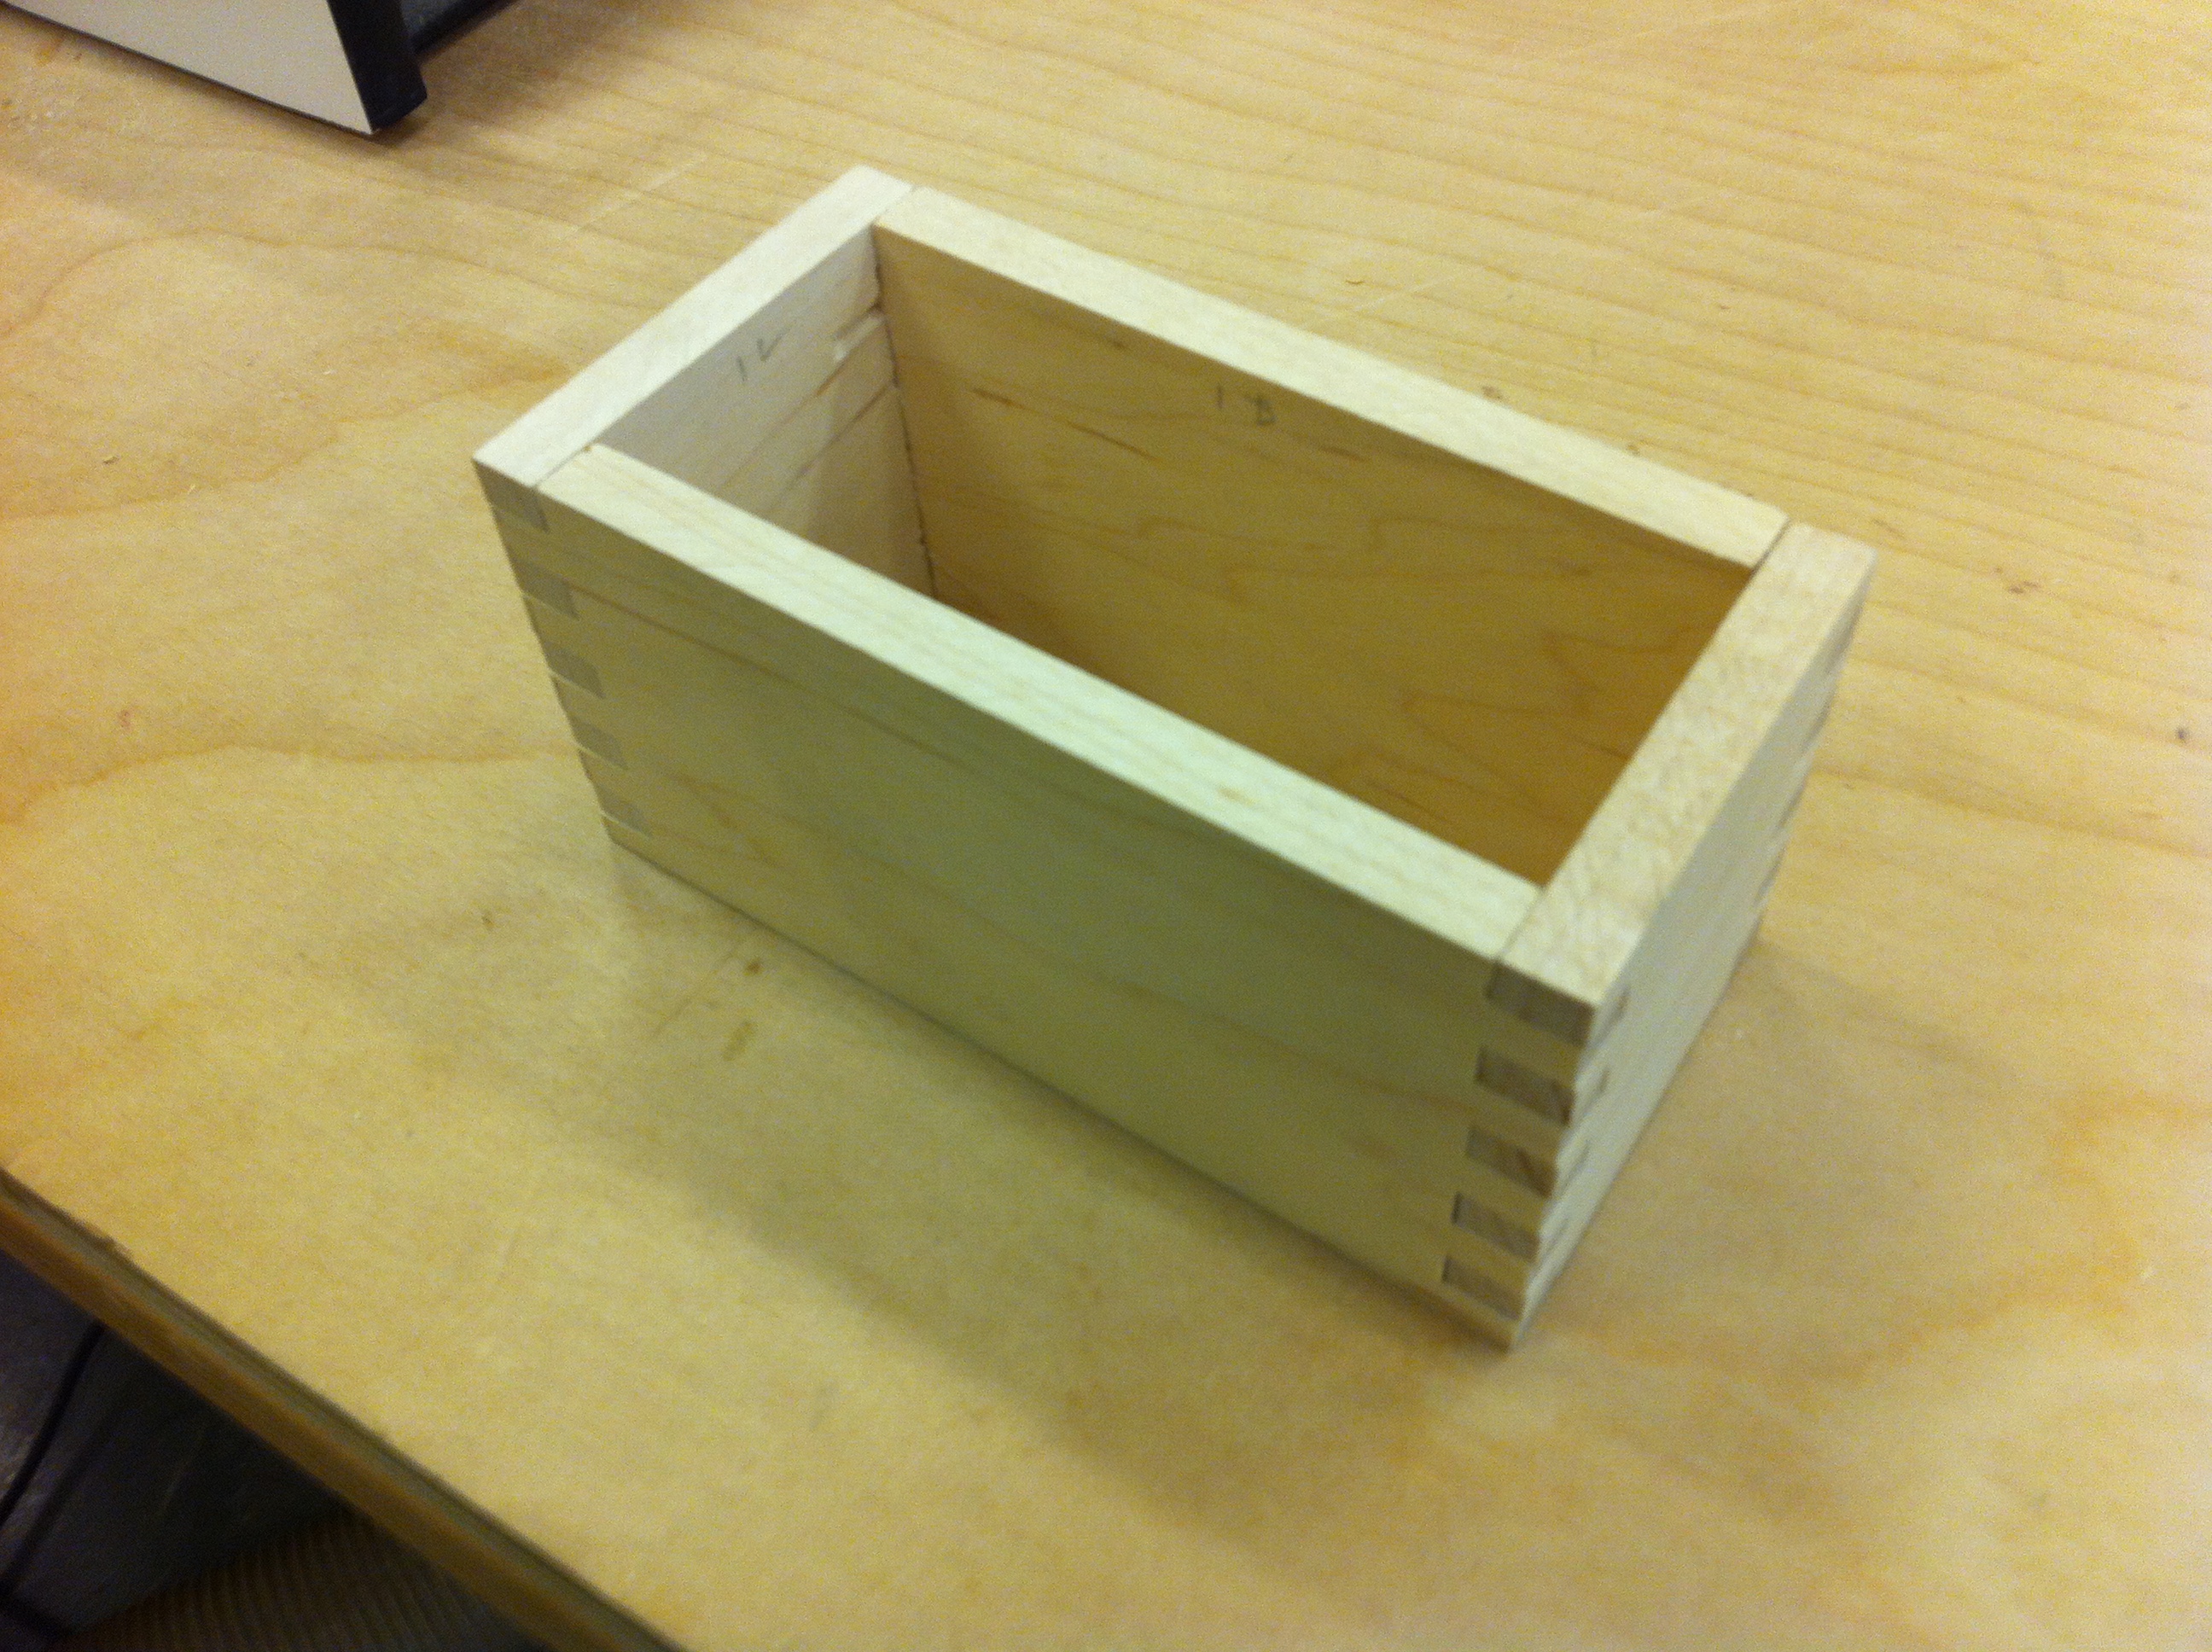 Make a quick box using box joints